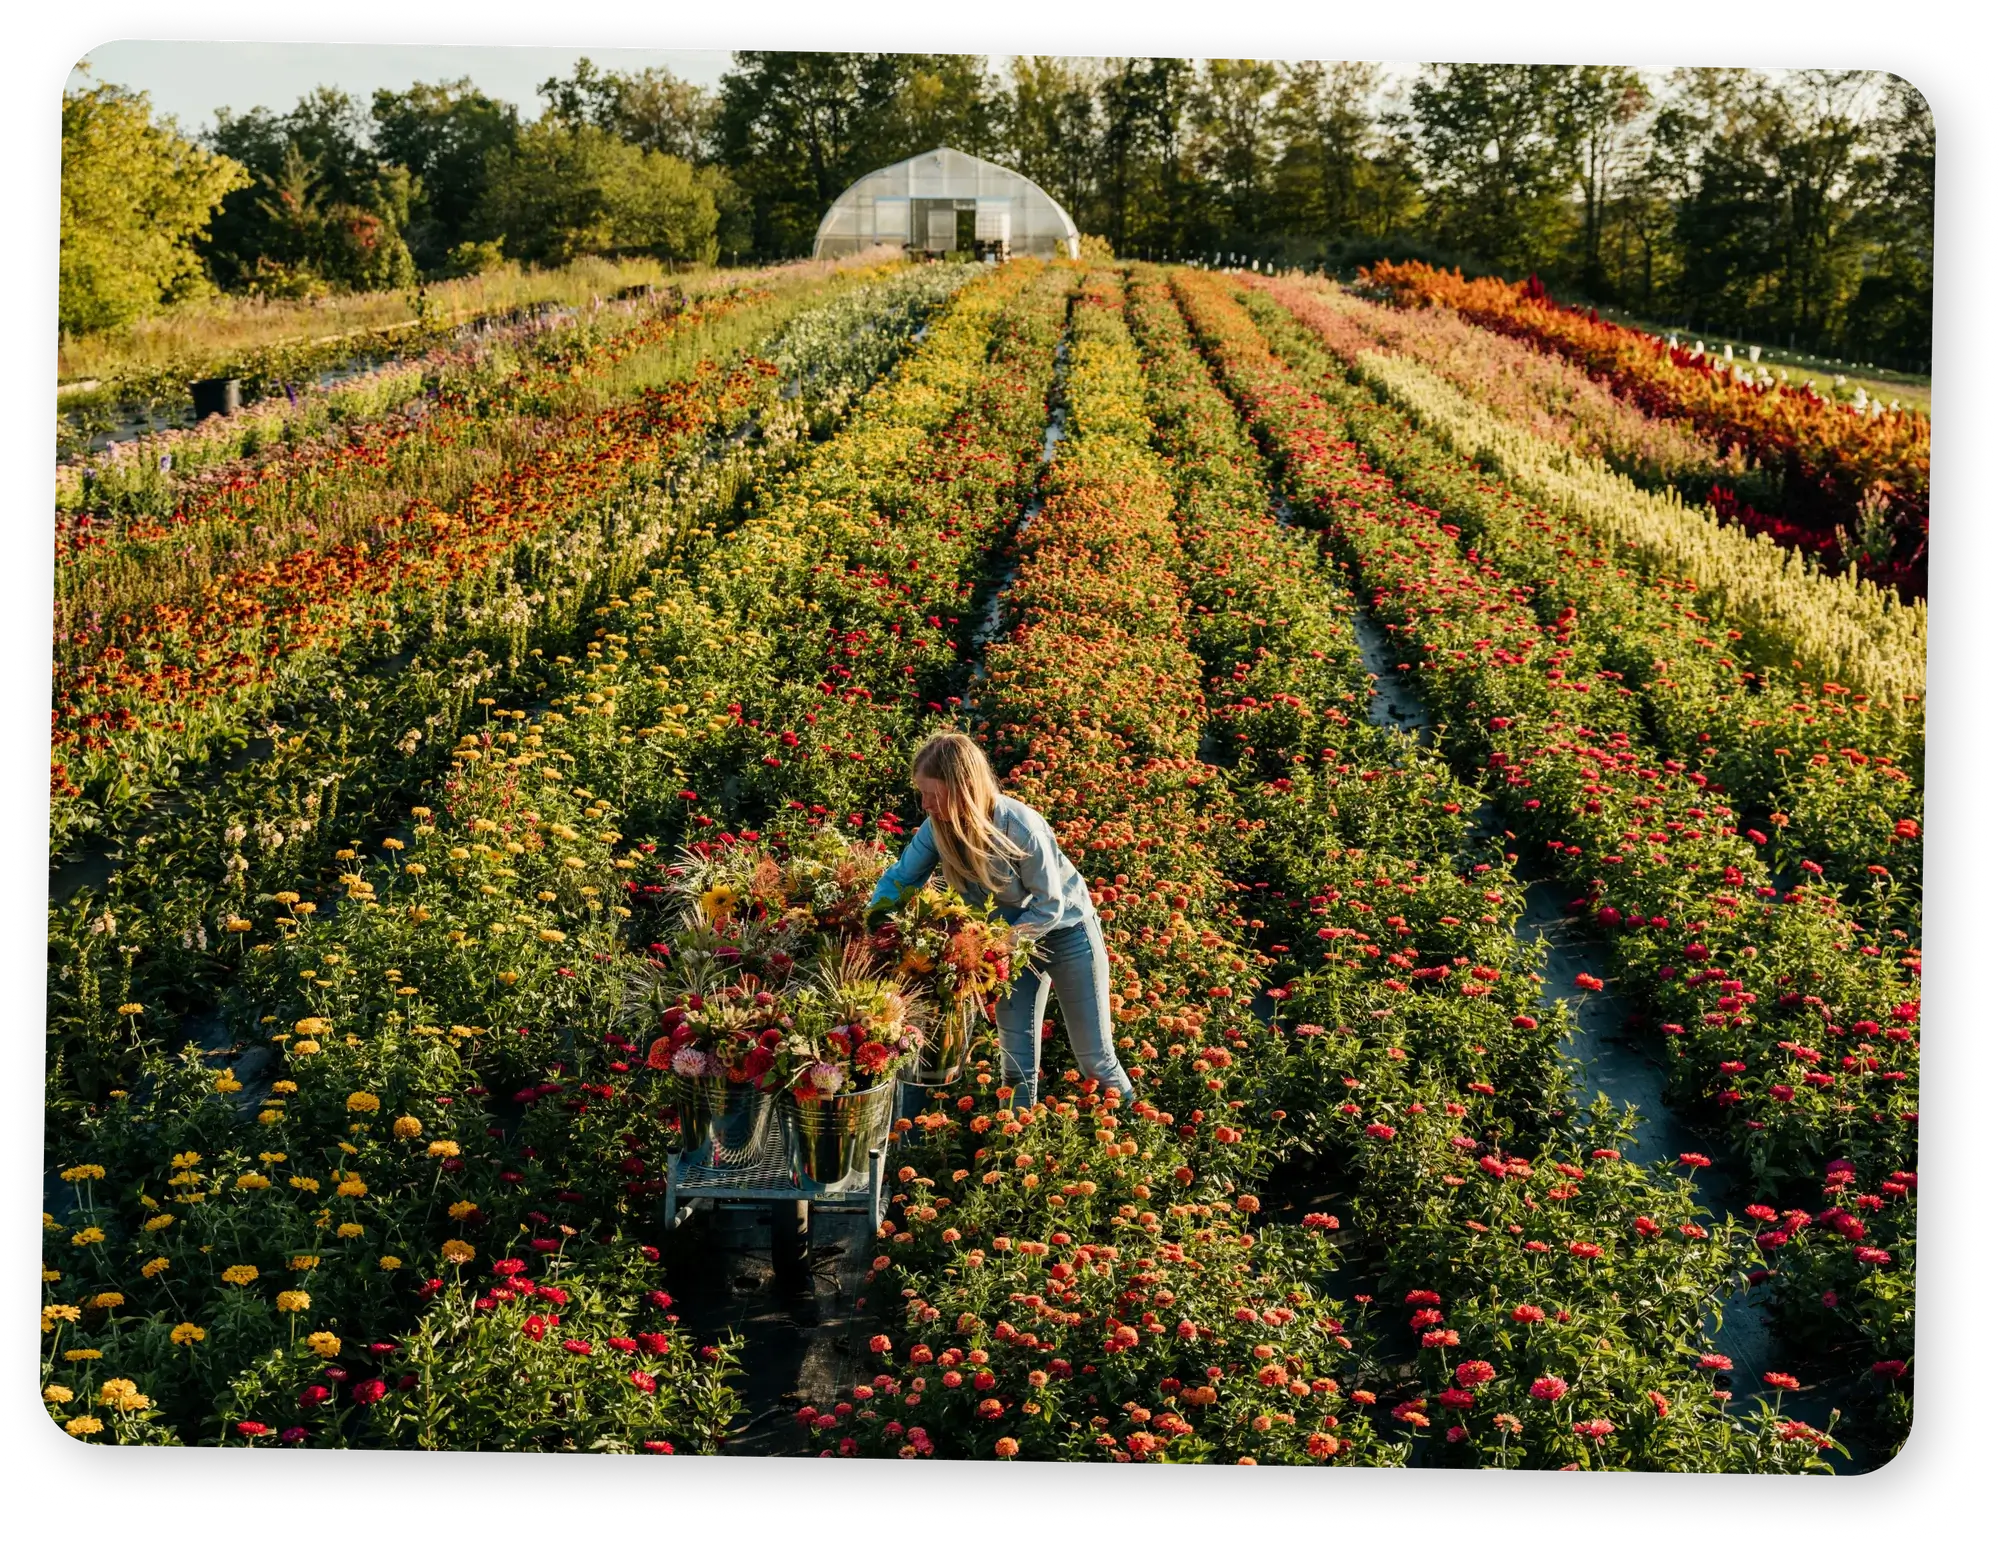 Dahlia May owner Melanie Harrington working in flower field